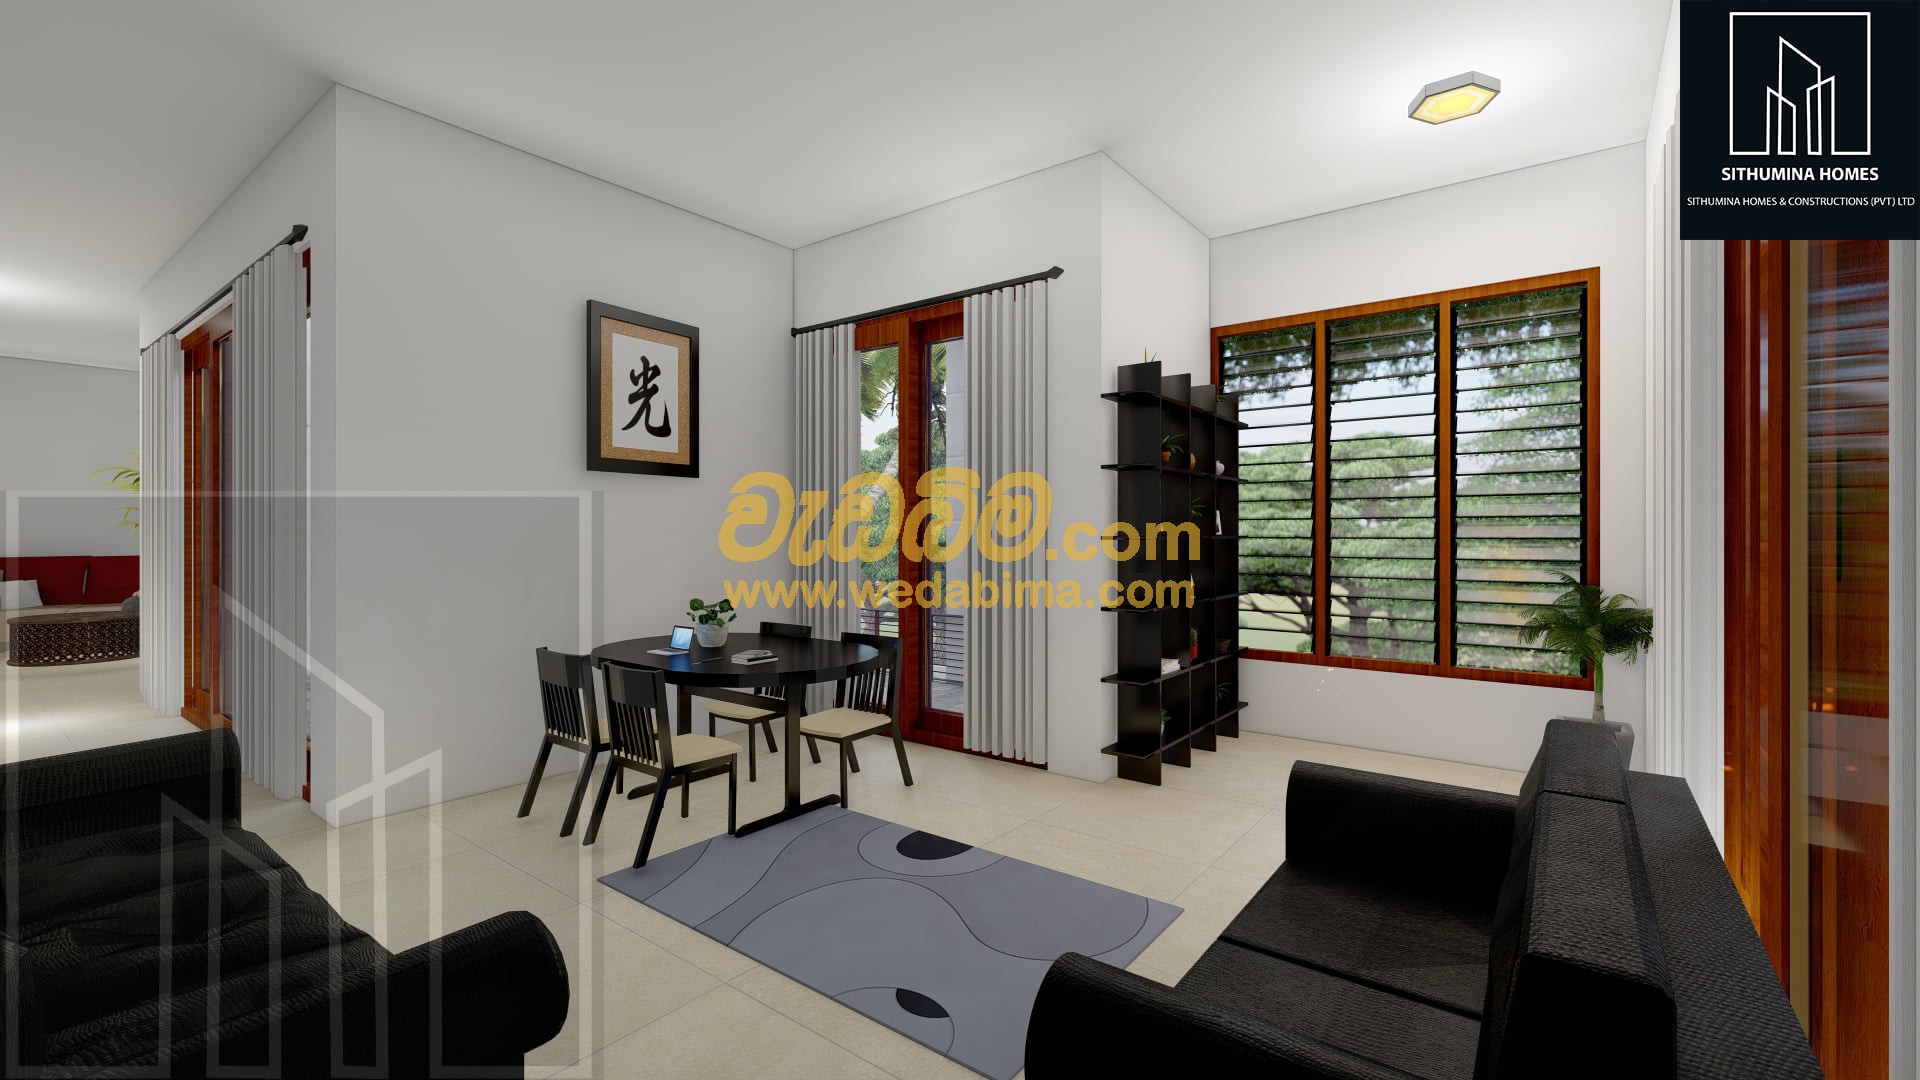 Cover image for House Interior Design Services in Sri Lanka